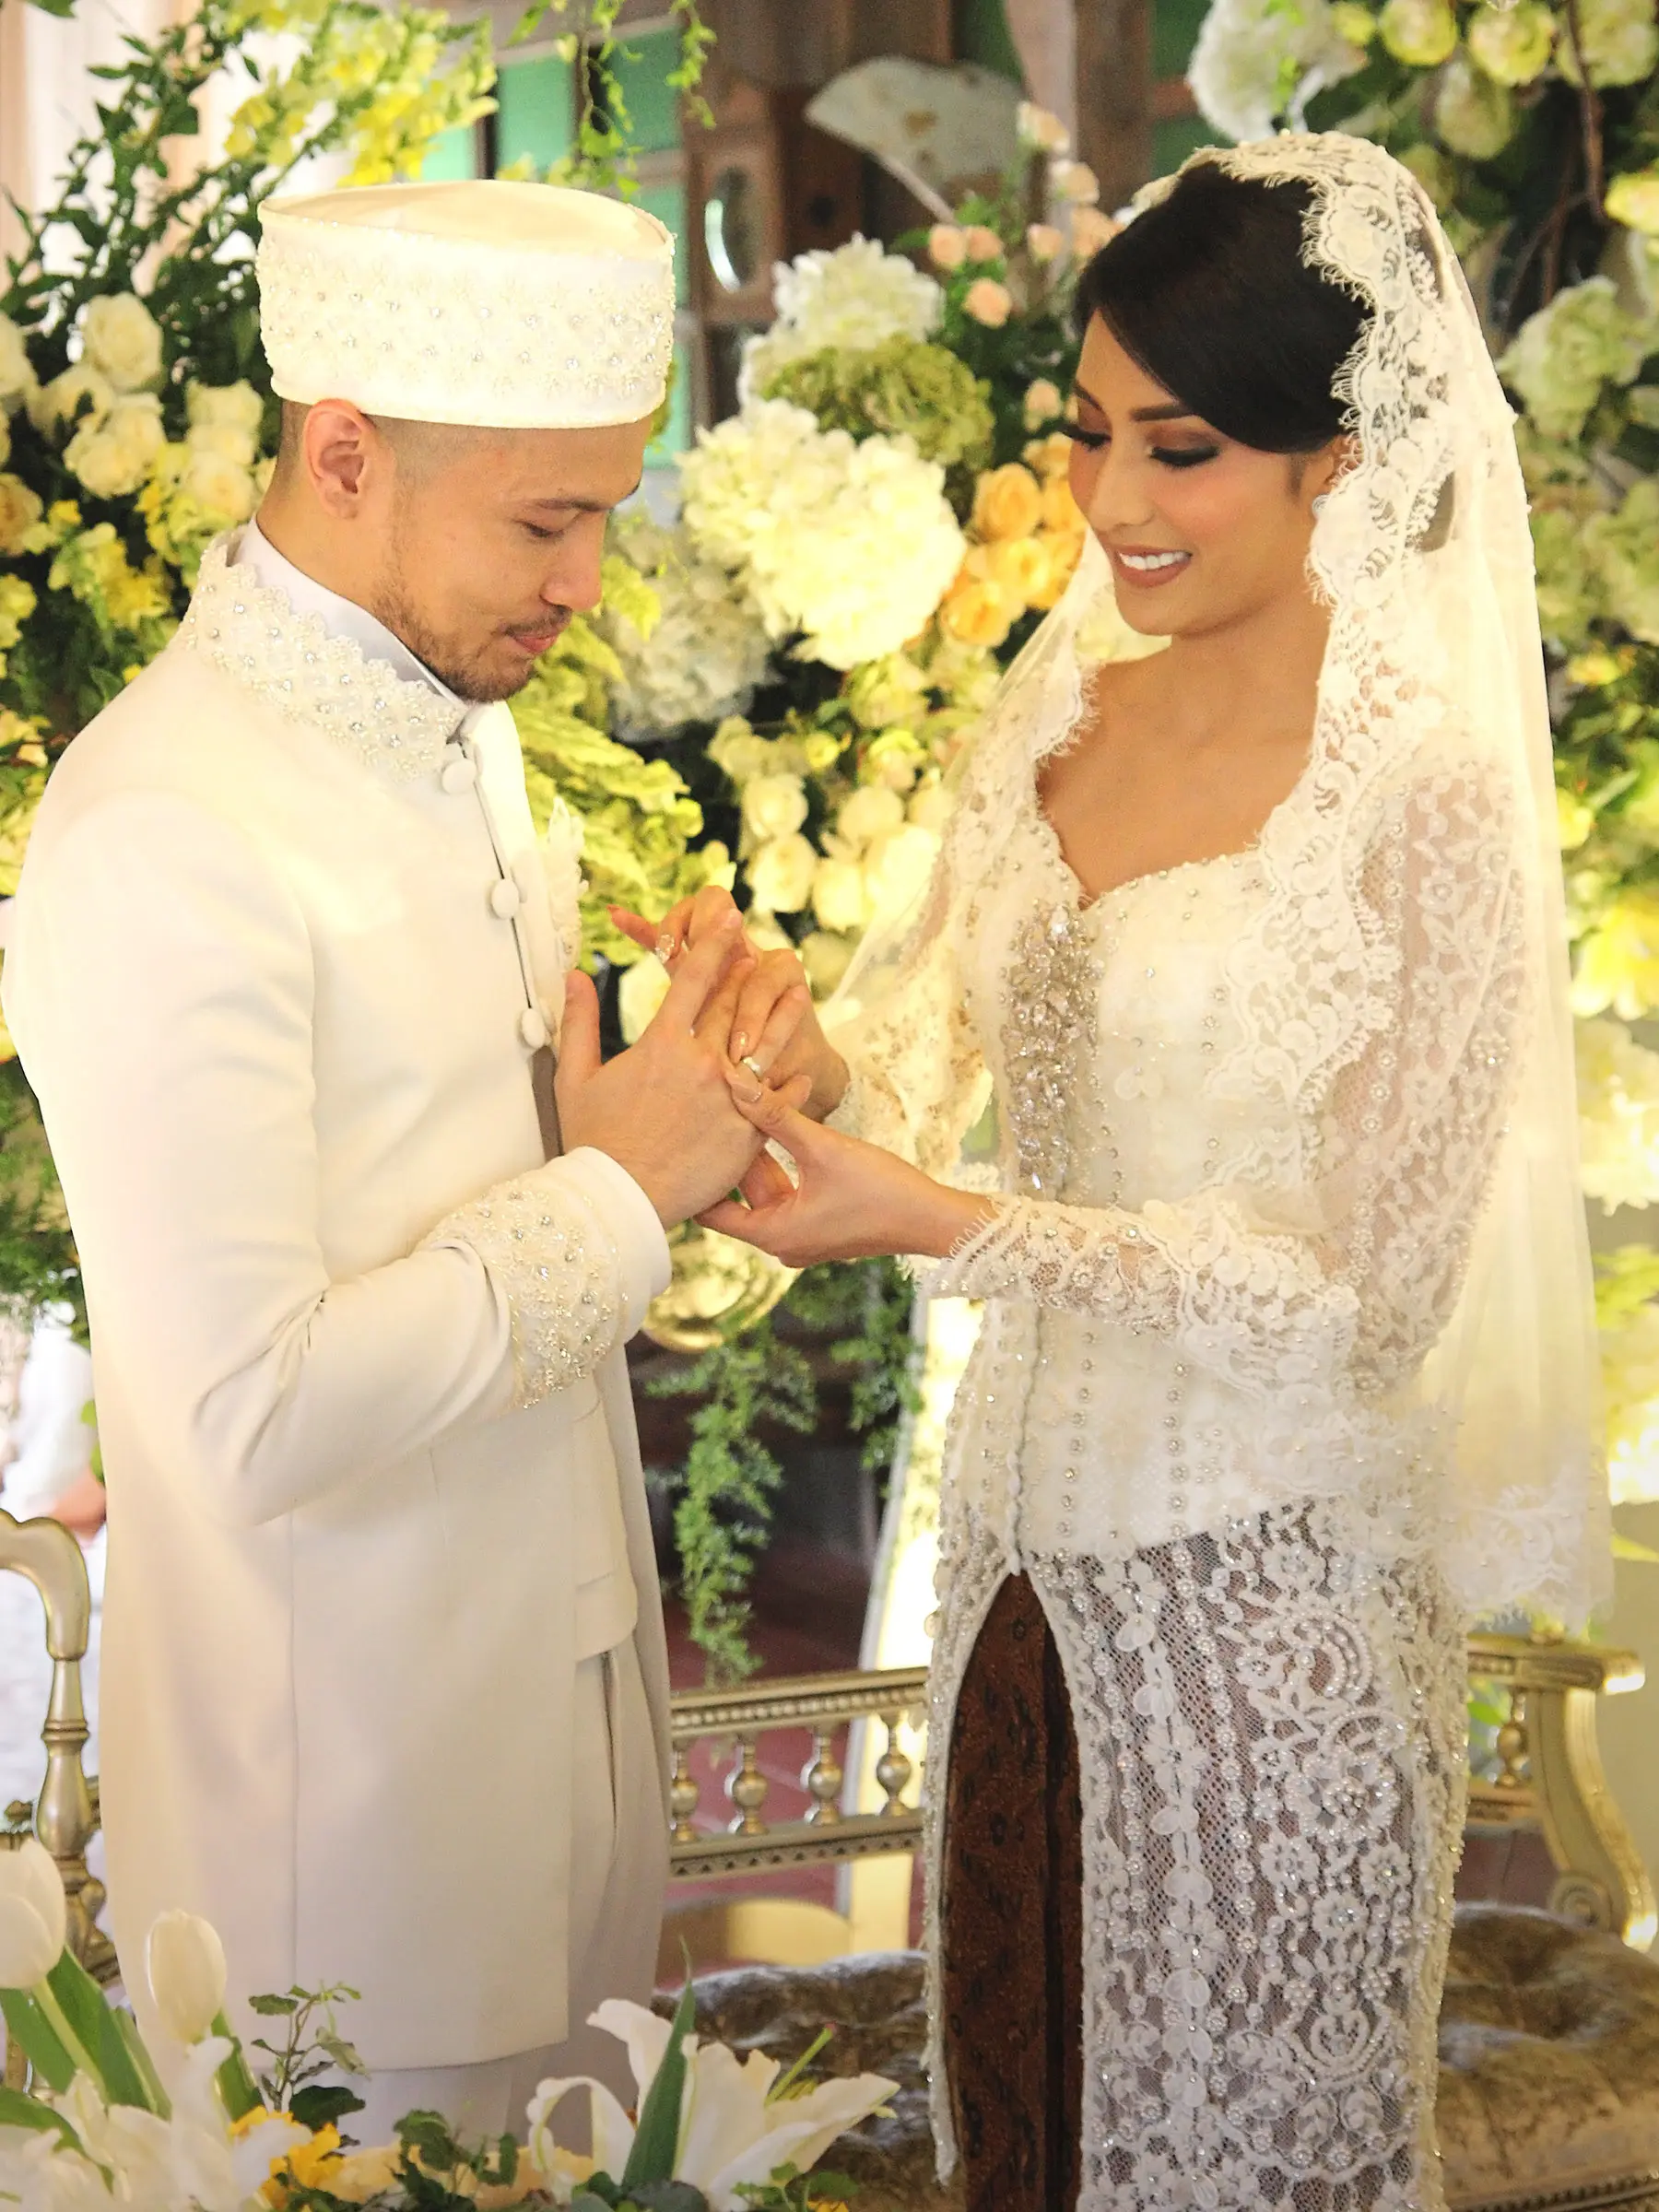 Tyas Mirasih resmi menjadi istri dari musisi Raiden Soedjono pada Sabtu (8/7/2017) siang. Setelah selesai akad nikah, pasangan ini akan menggelar resepsi pernikahan di tempat yang sama pada malam harinya. (Bambang E. Ros/Bintang.com)